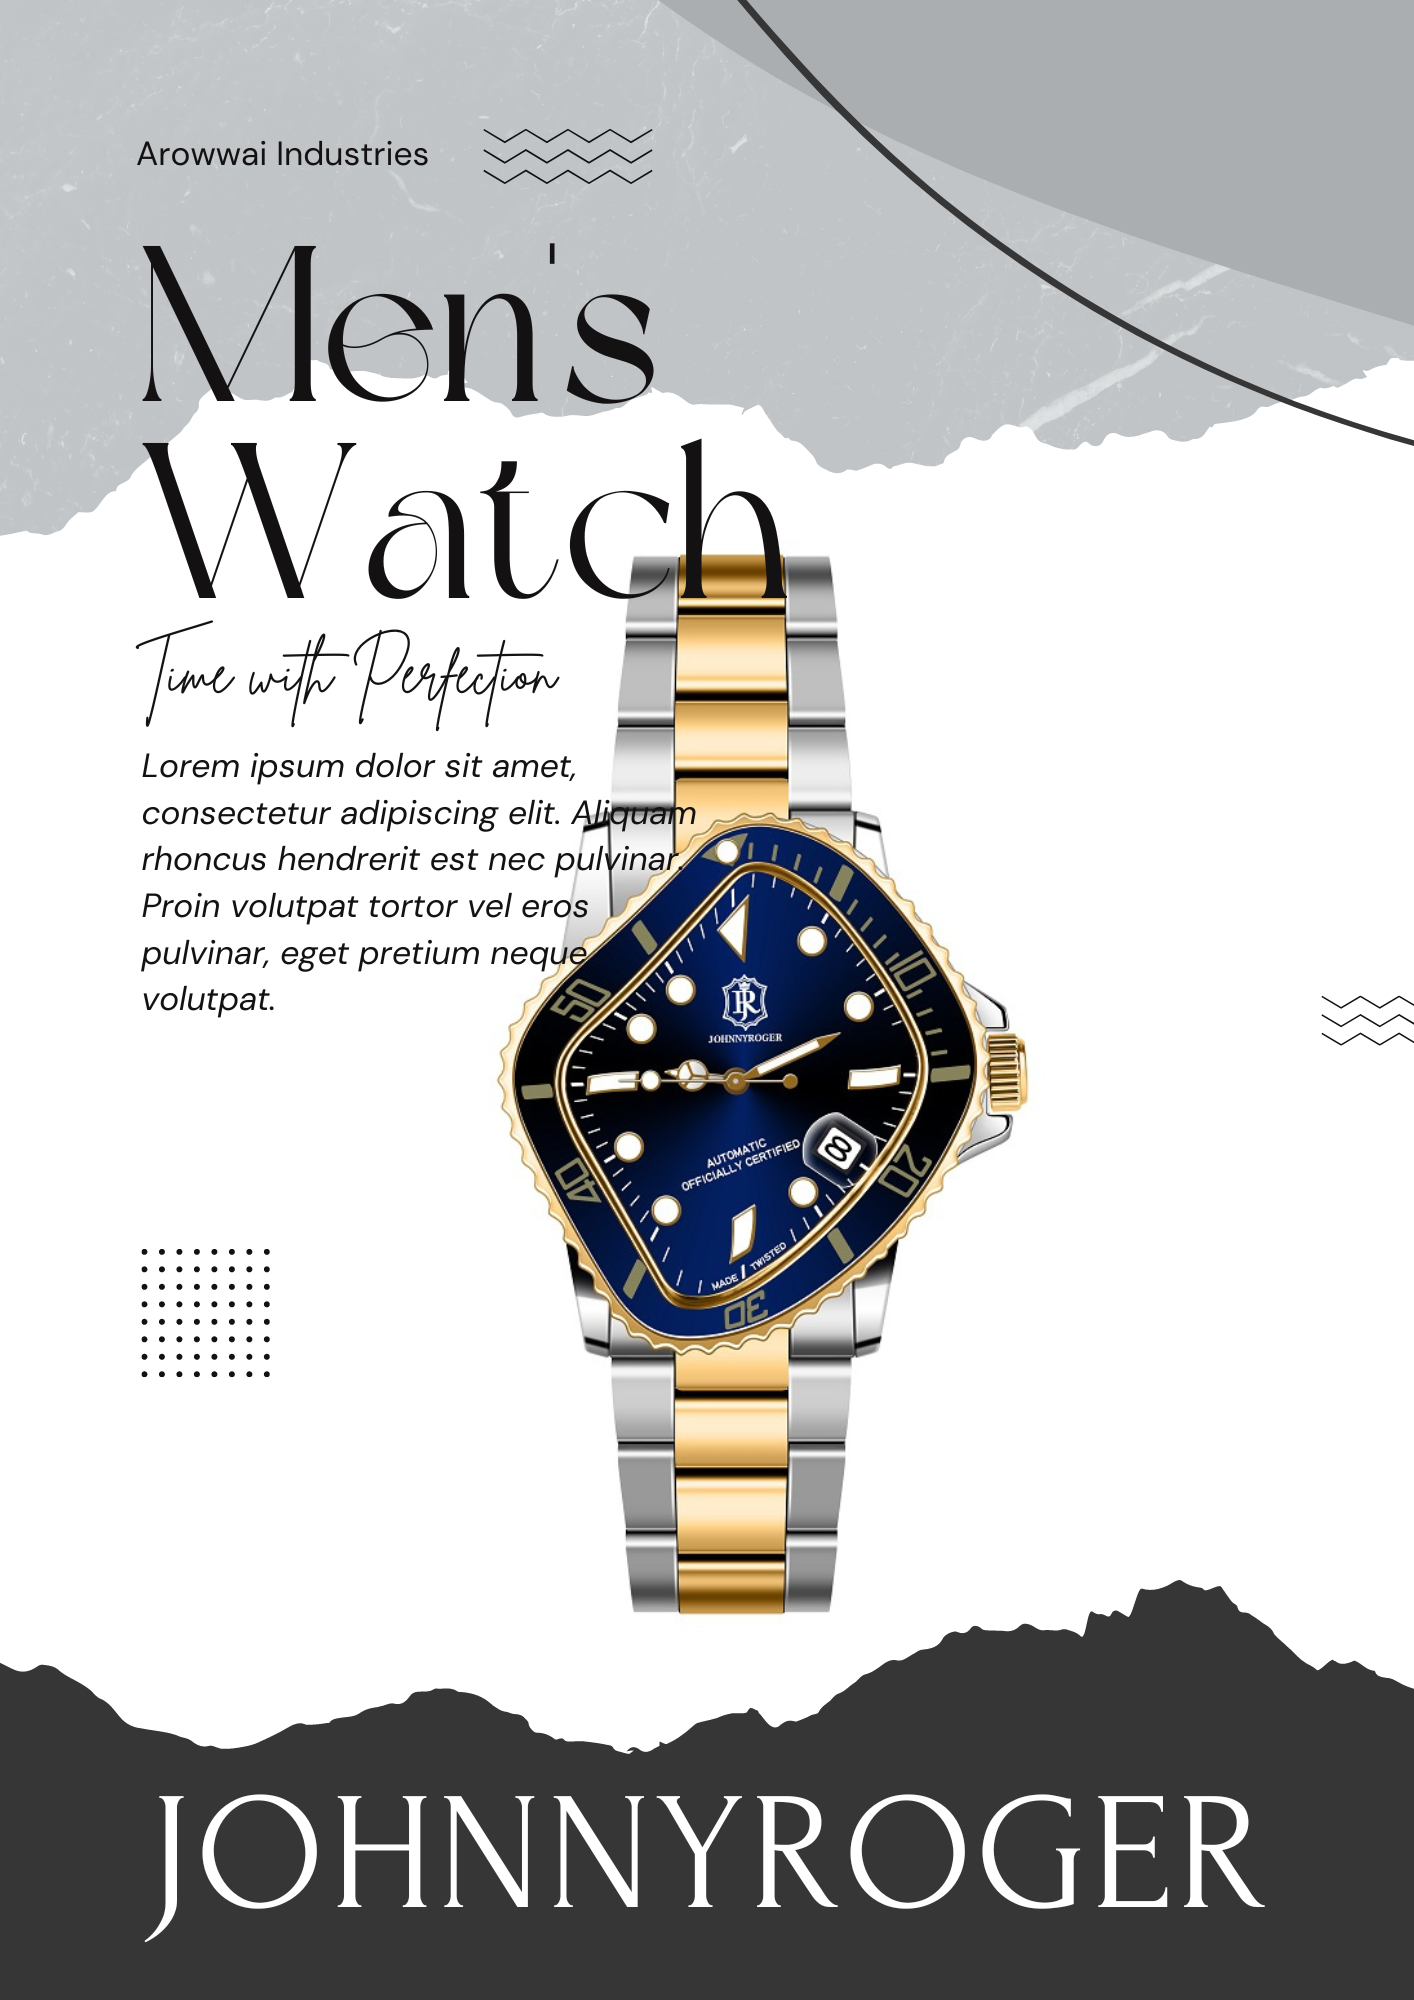 JOHNNYROGER TWISTED 腕時計 - 時を超えるスタイルと革新